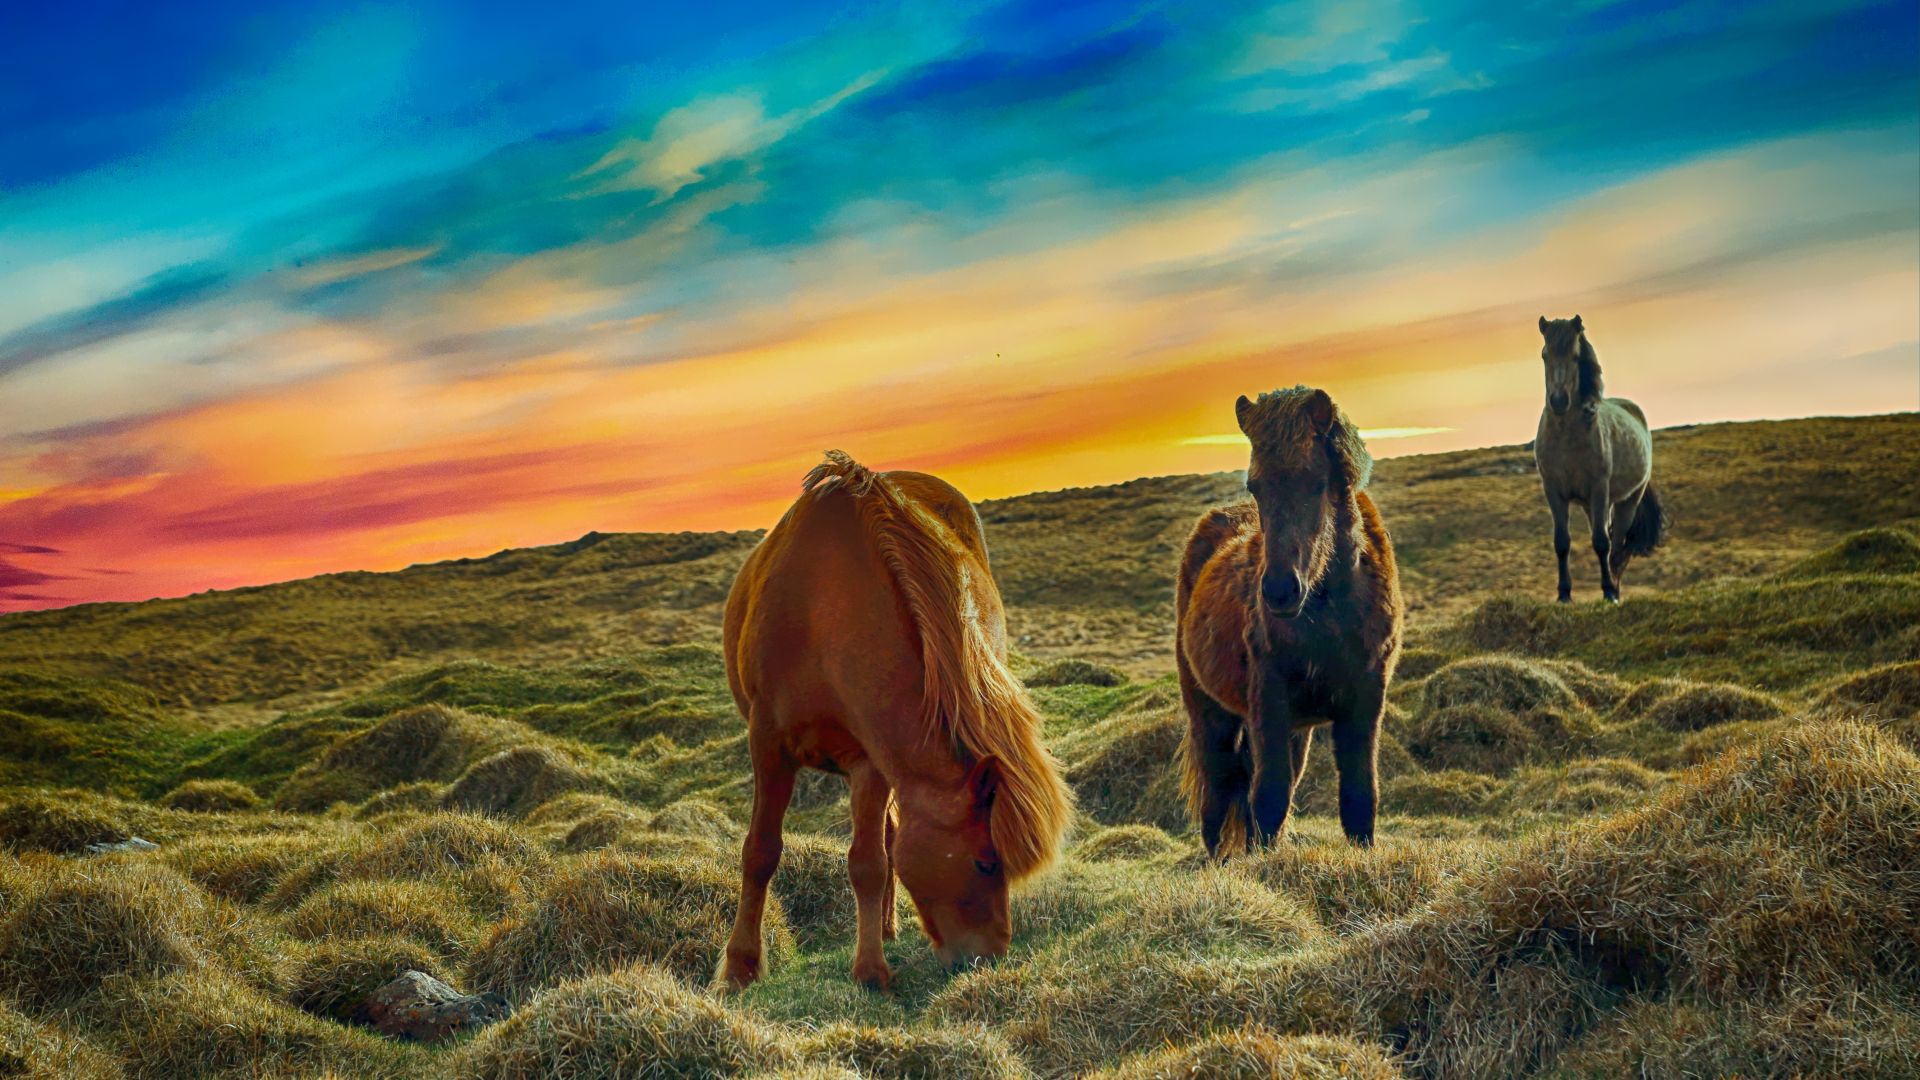 Desktop Wallpaper Animals Horses Grazing Landscape Hd Image